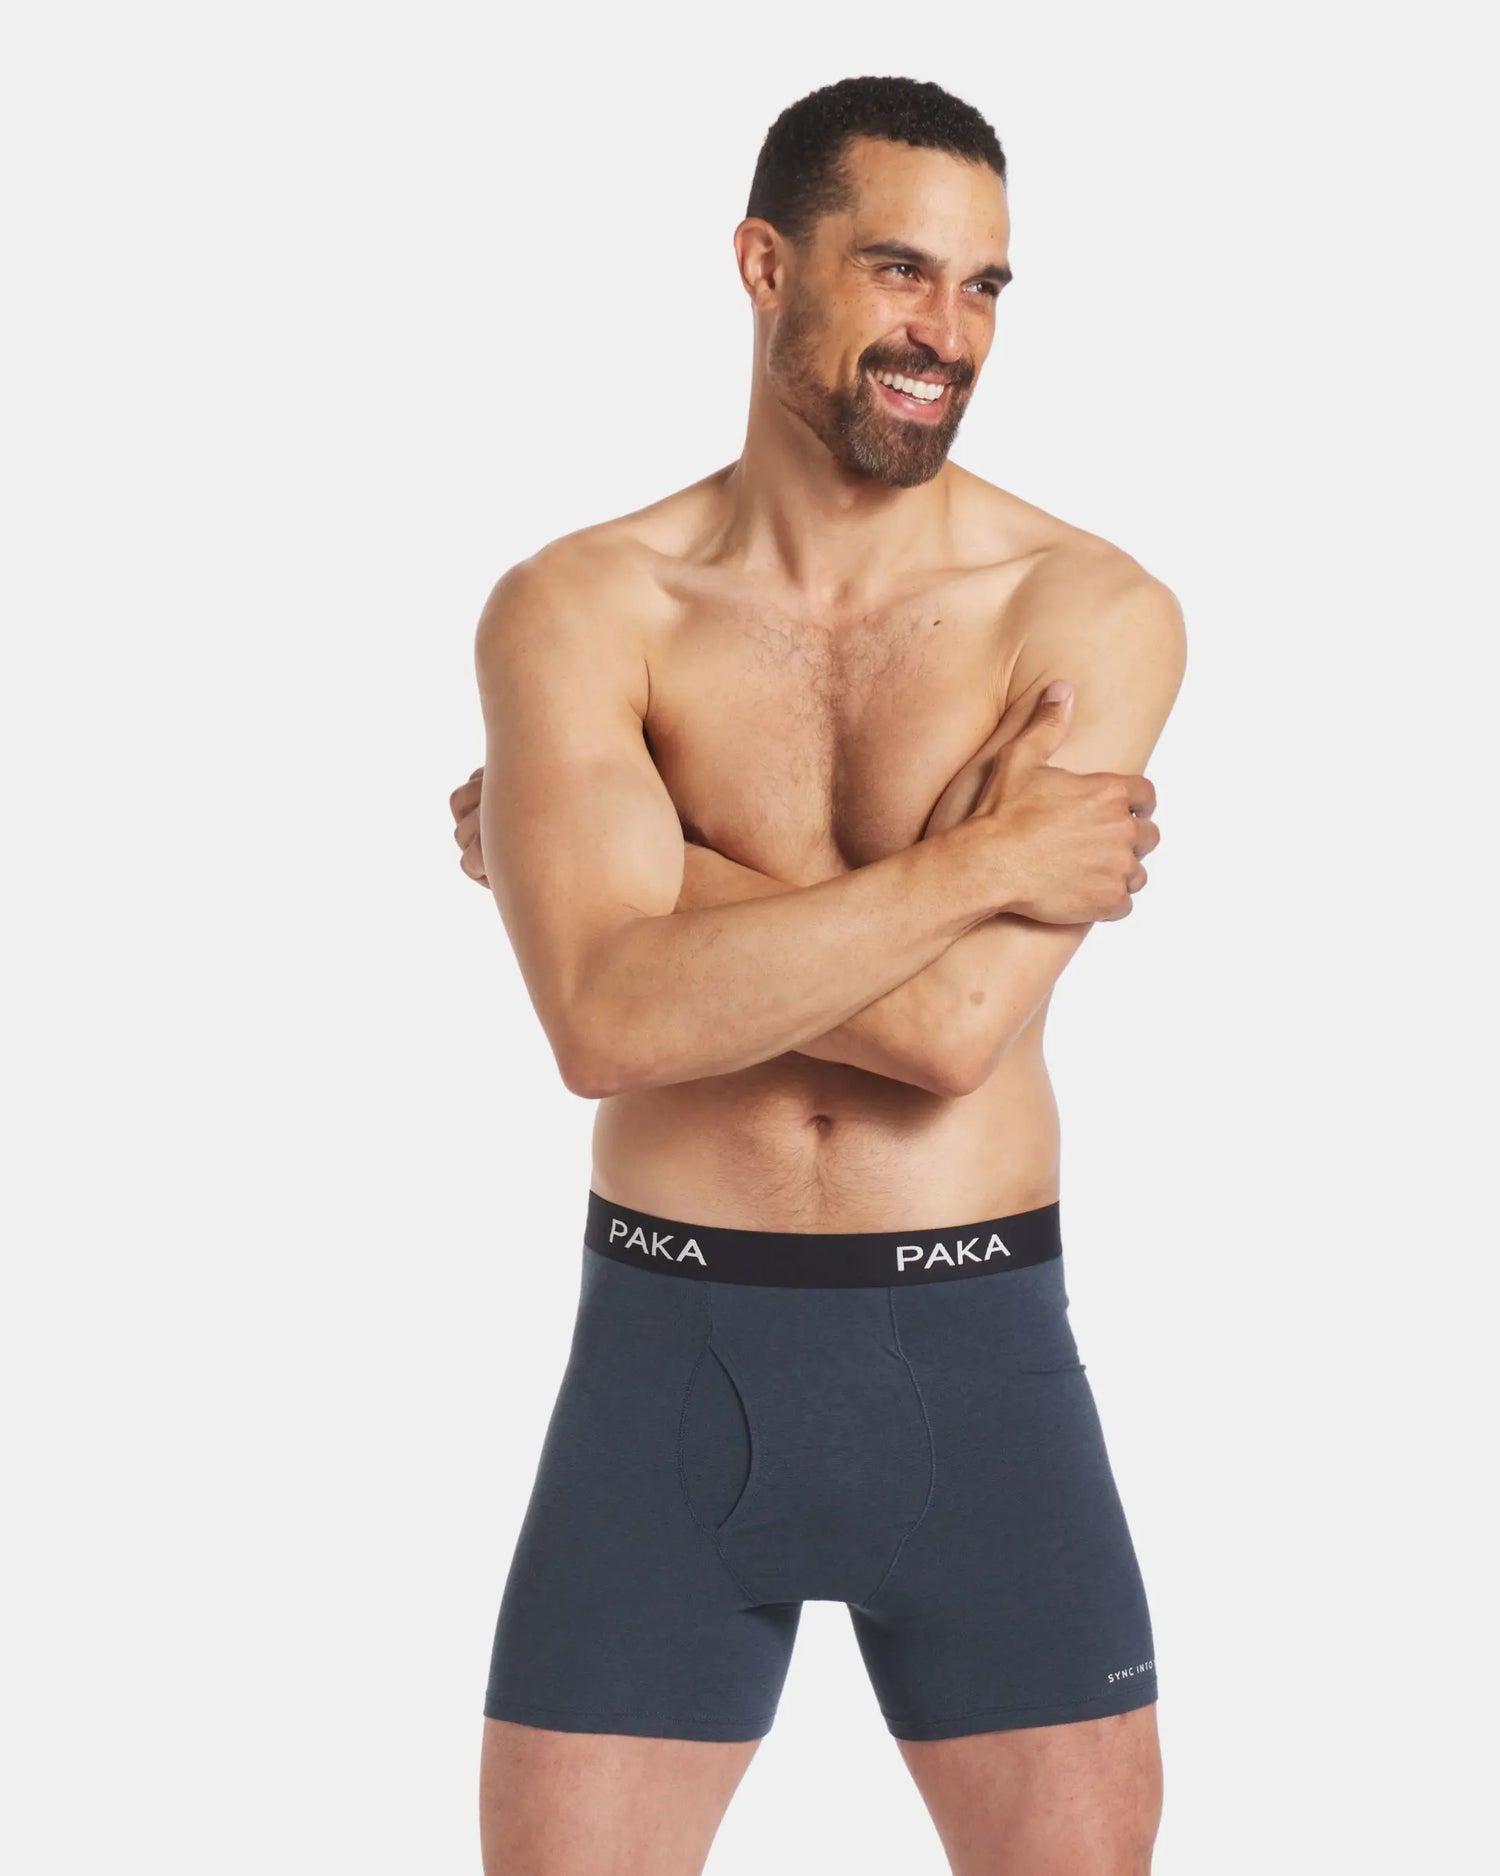 Men's blue alpaca briefs underwear on model